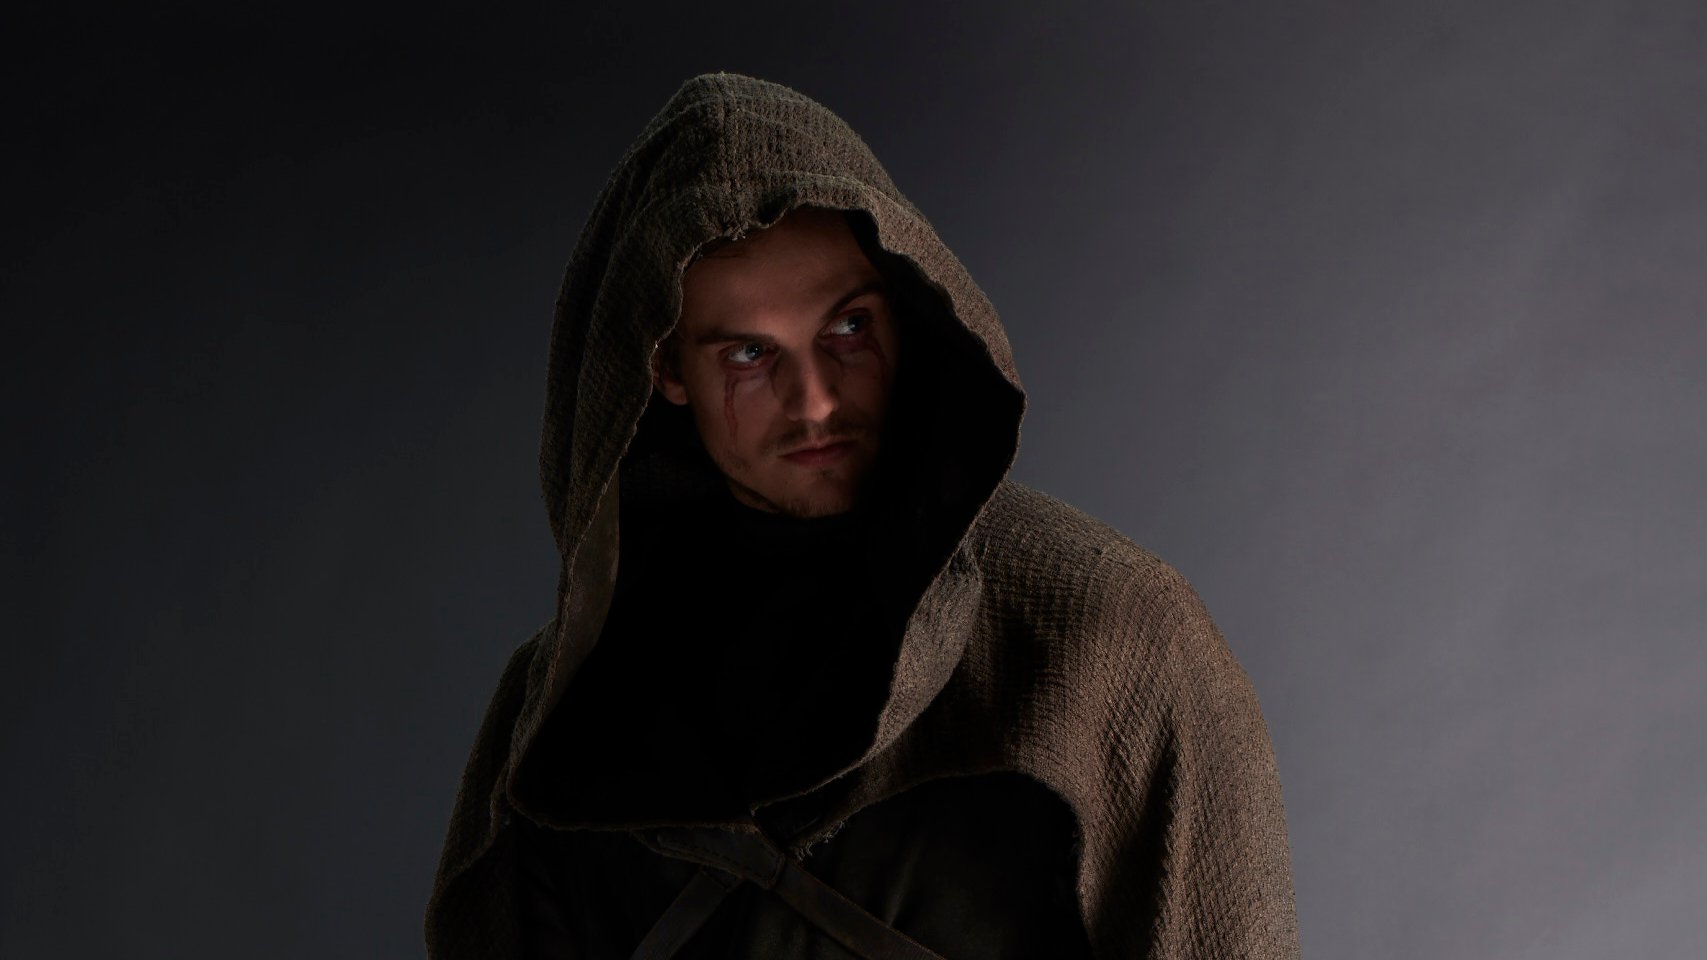 Cursed - Season 1 Portrait - Daniel Sharman as The Weeping Monk